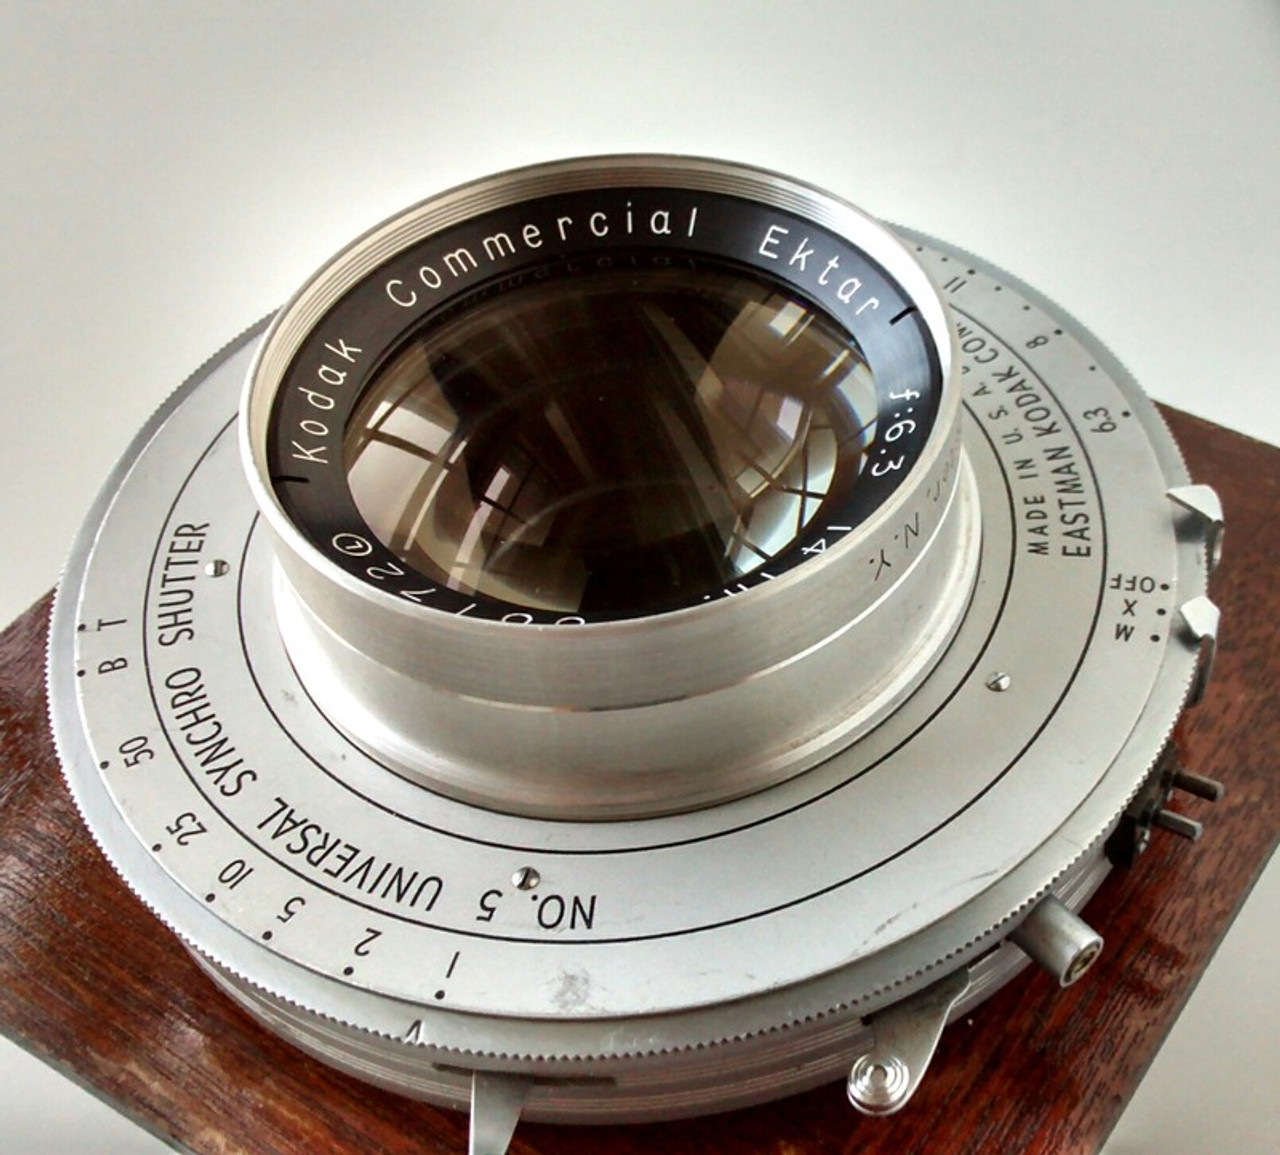 Kodak 14 Inch f/6.3 Commercial Ektar Lens in No. 5 Ilex Universal Synchro  Shutter - Surplus Camera Gear